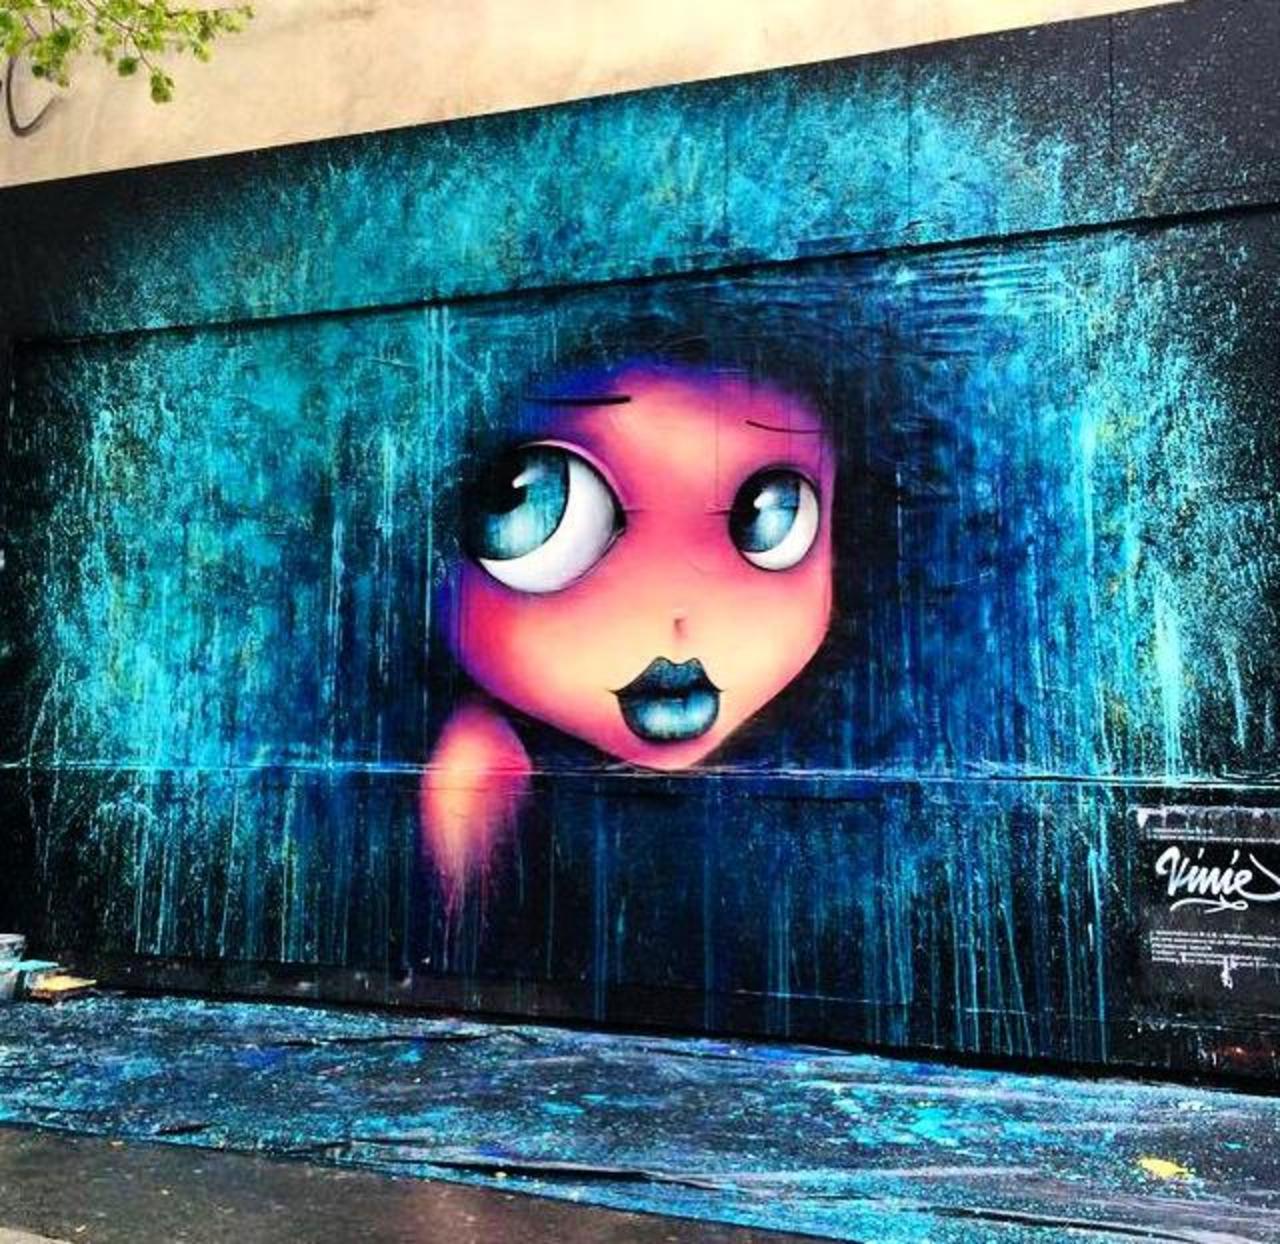 New Street Art by VinieGraffiti in Paris

#art #arte #graffiti #streetart http://t.co/2tvtQPfEOS